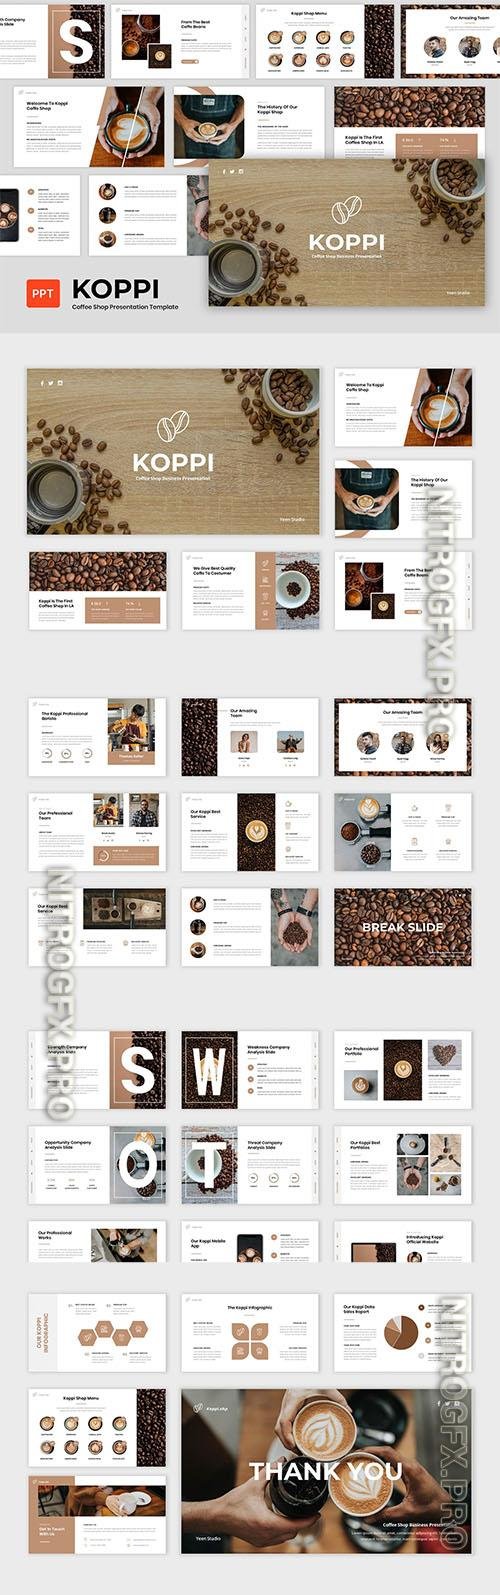 Koppi - Coffee Shop Presentation Powerpoint, Keynote and Google Slides Template